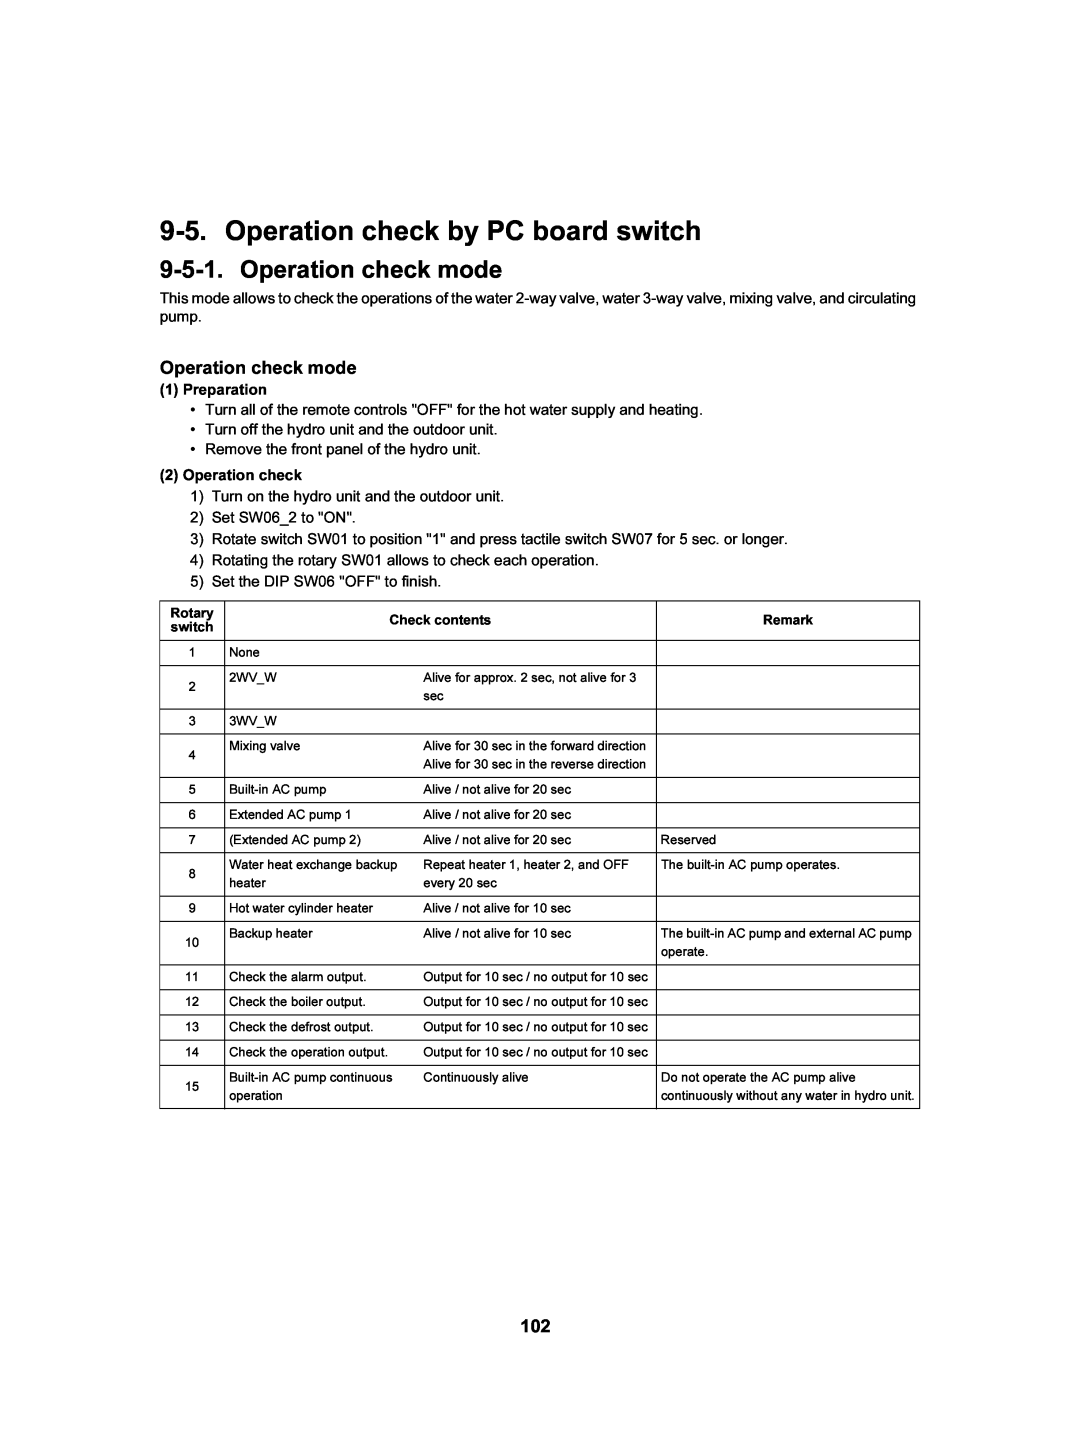 Toshiba HWS-3001CSHM3-E(-UK), HWS-802XWHT6-E, HWS-802H-E Operation check by PC board switch, Operation check mode 